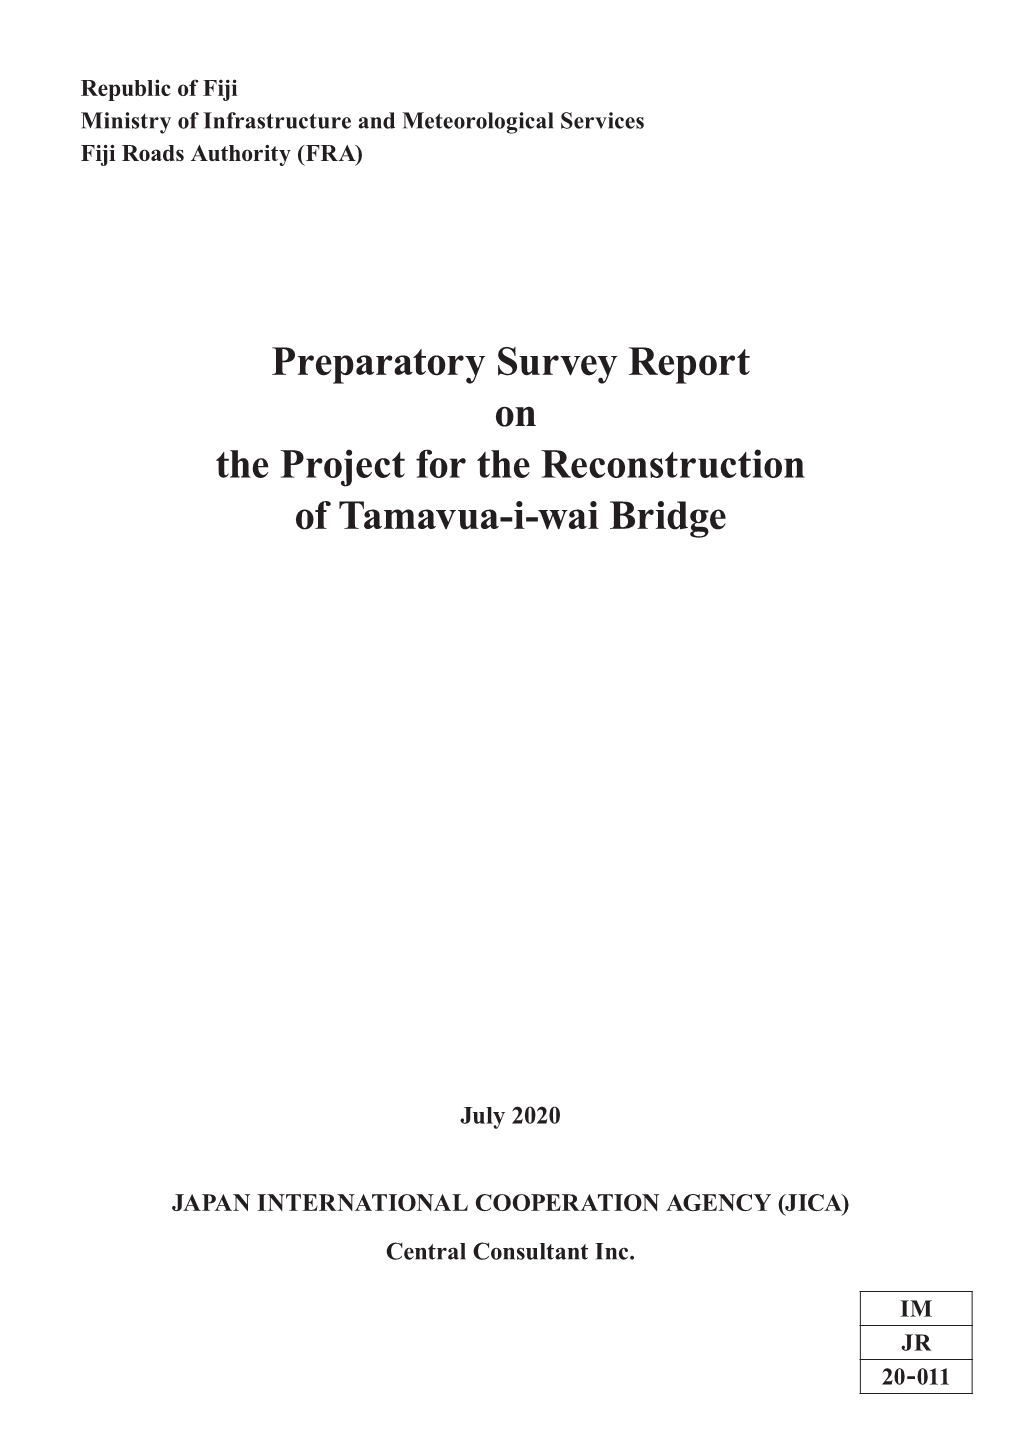 Preparatory Survey Report on the Project for the Reconstruction of Tamavua-I-Wai Bridge